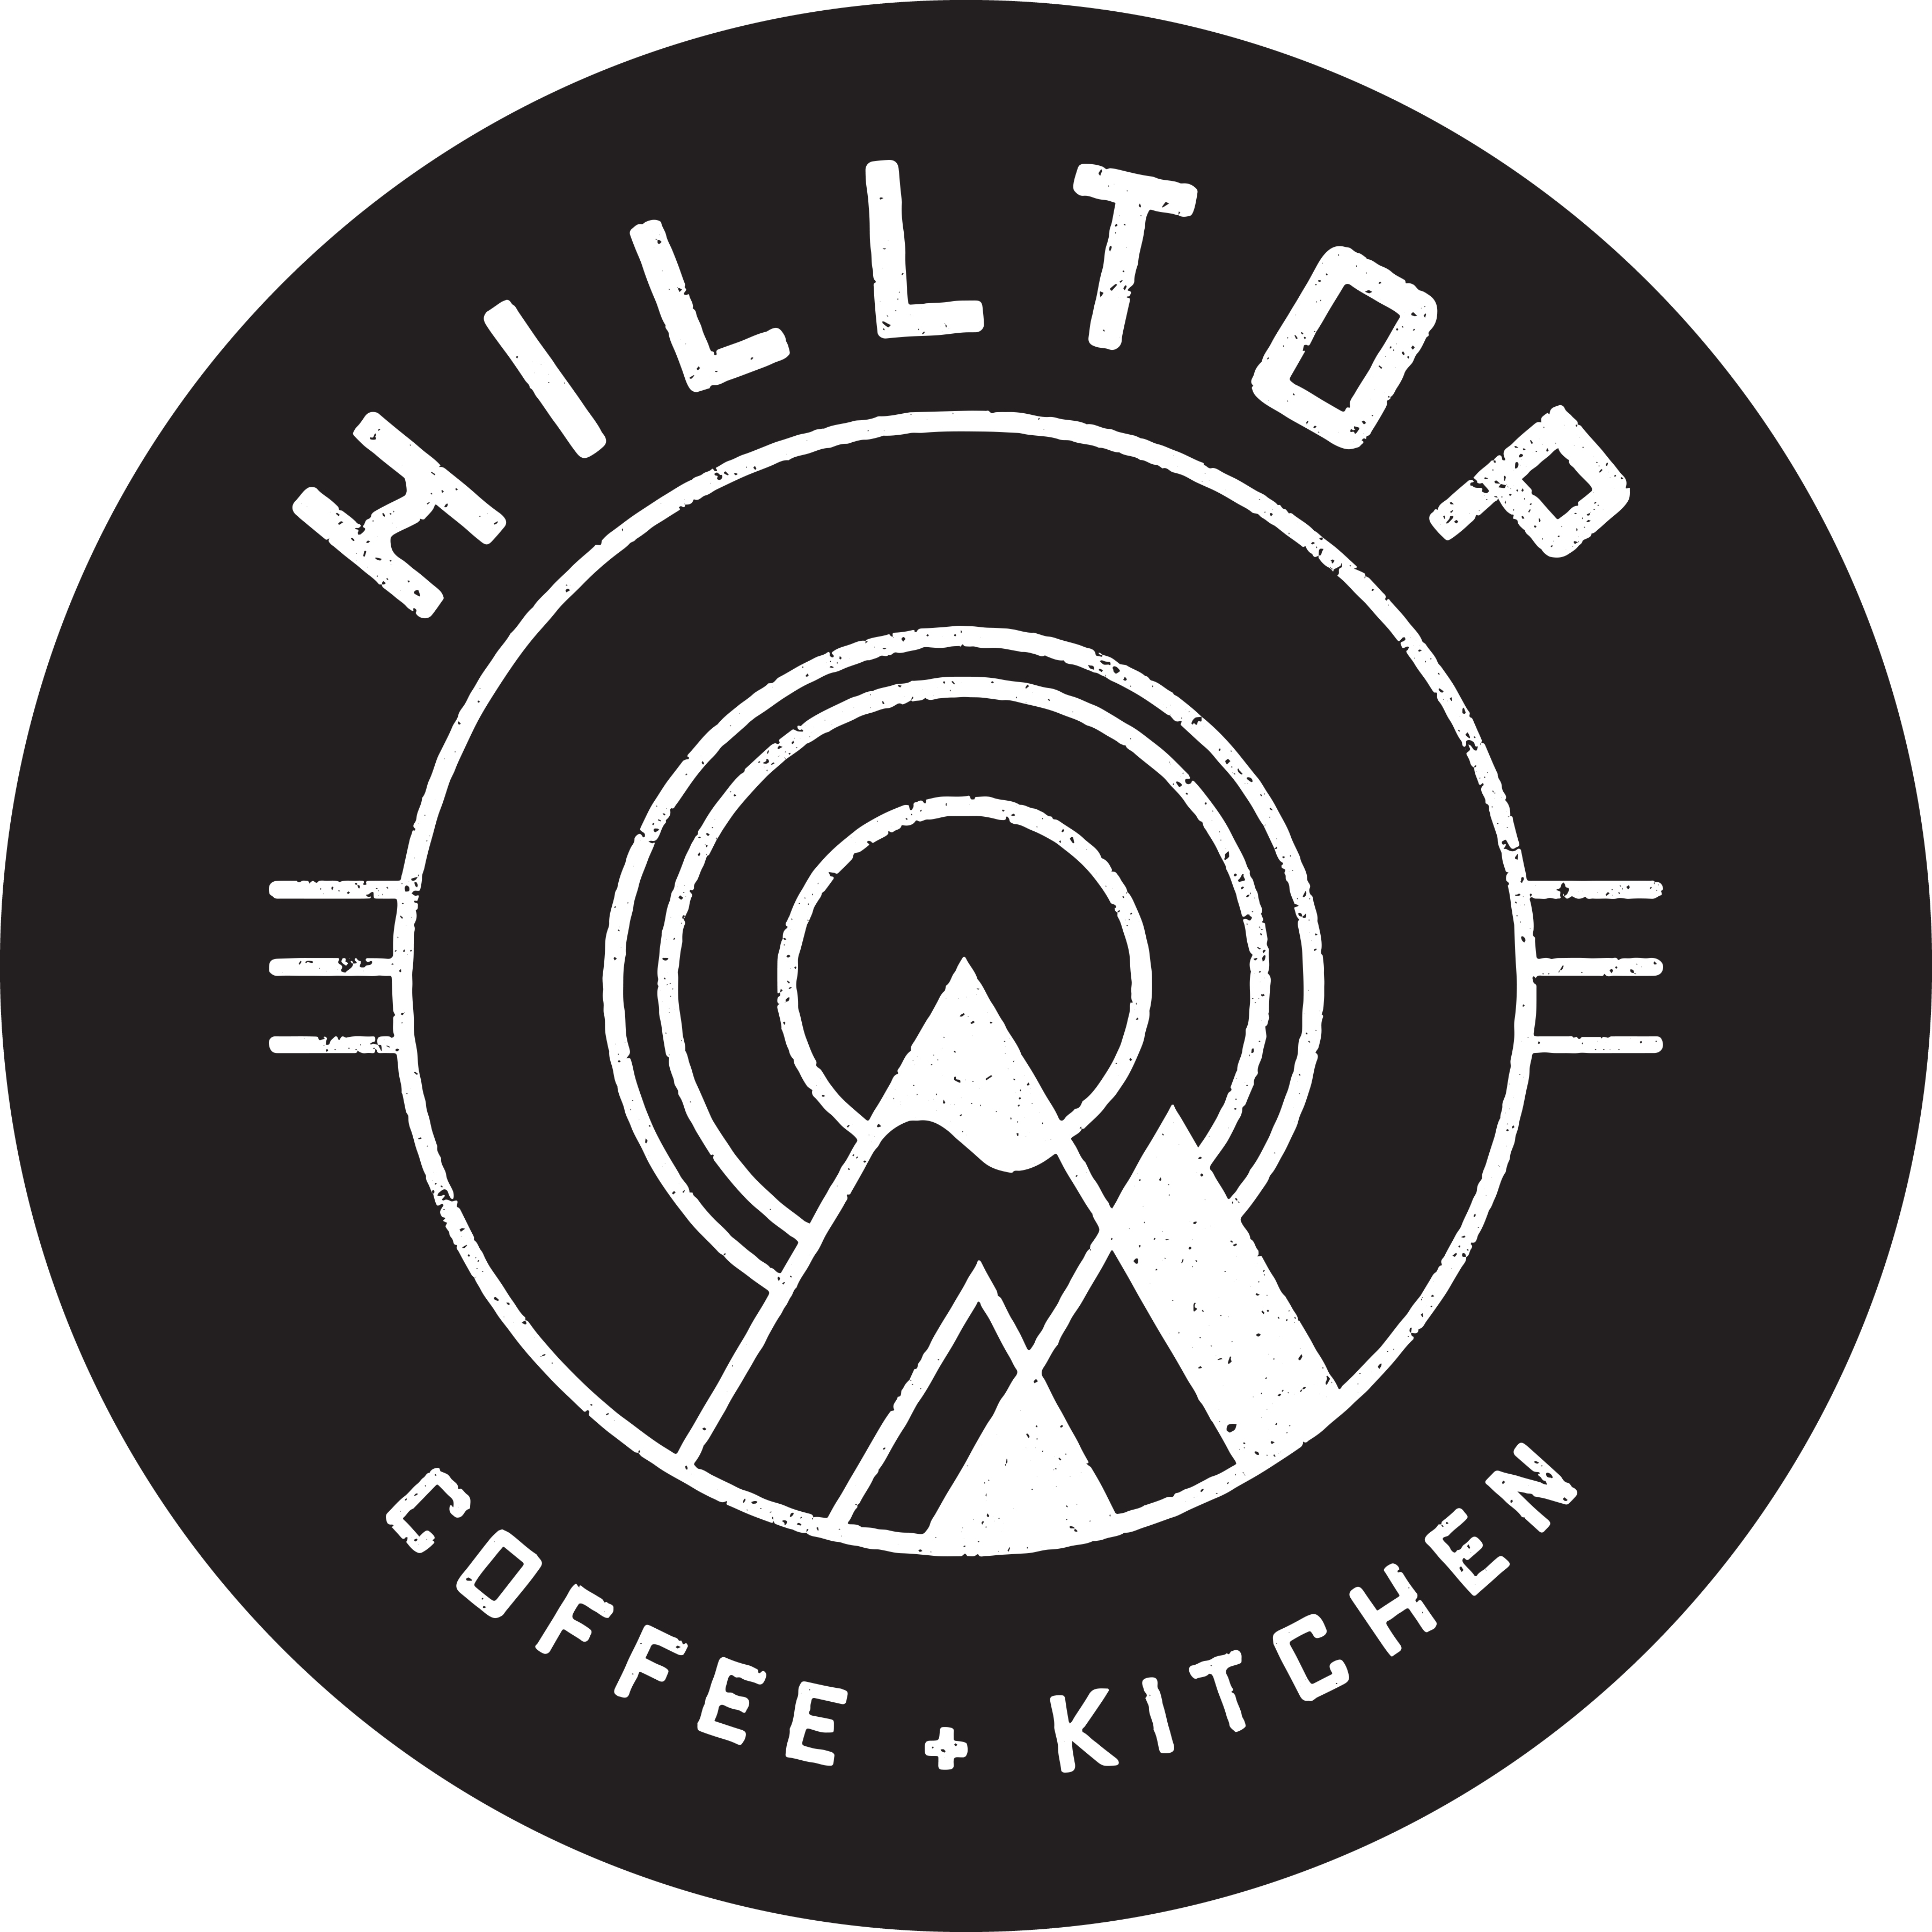 Hilltop's logo